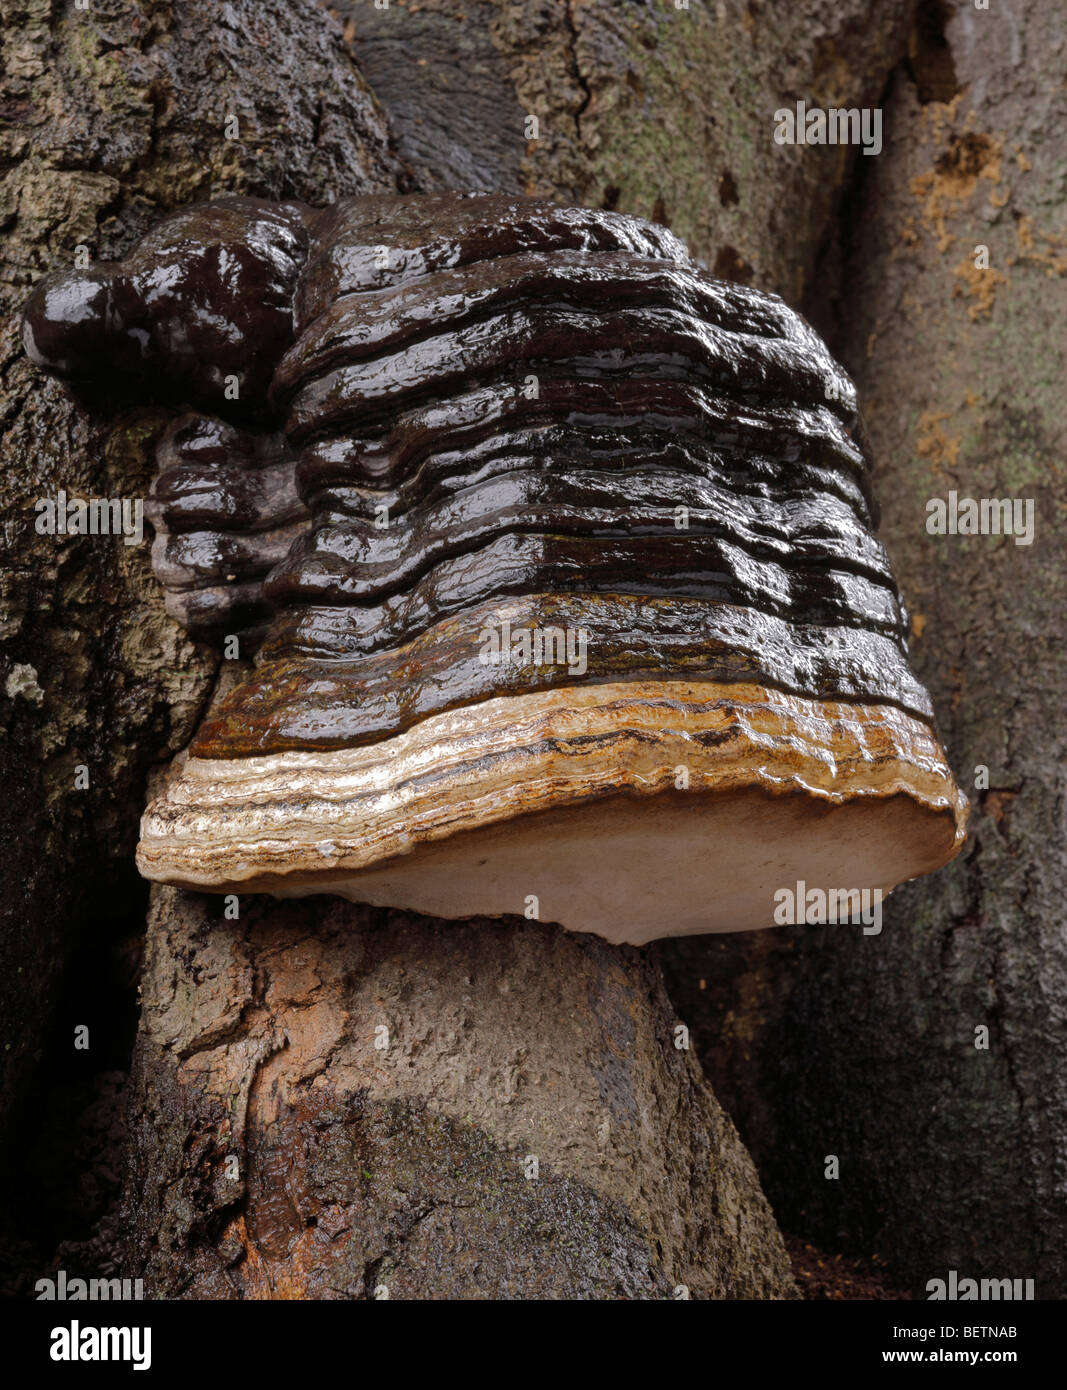 Hoof Fungus, Fomes fomentarius, growing on a dead Beech tree. Sevenoaks, Kent, England, UK. Stock Photo